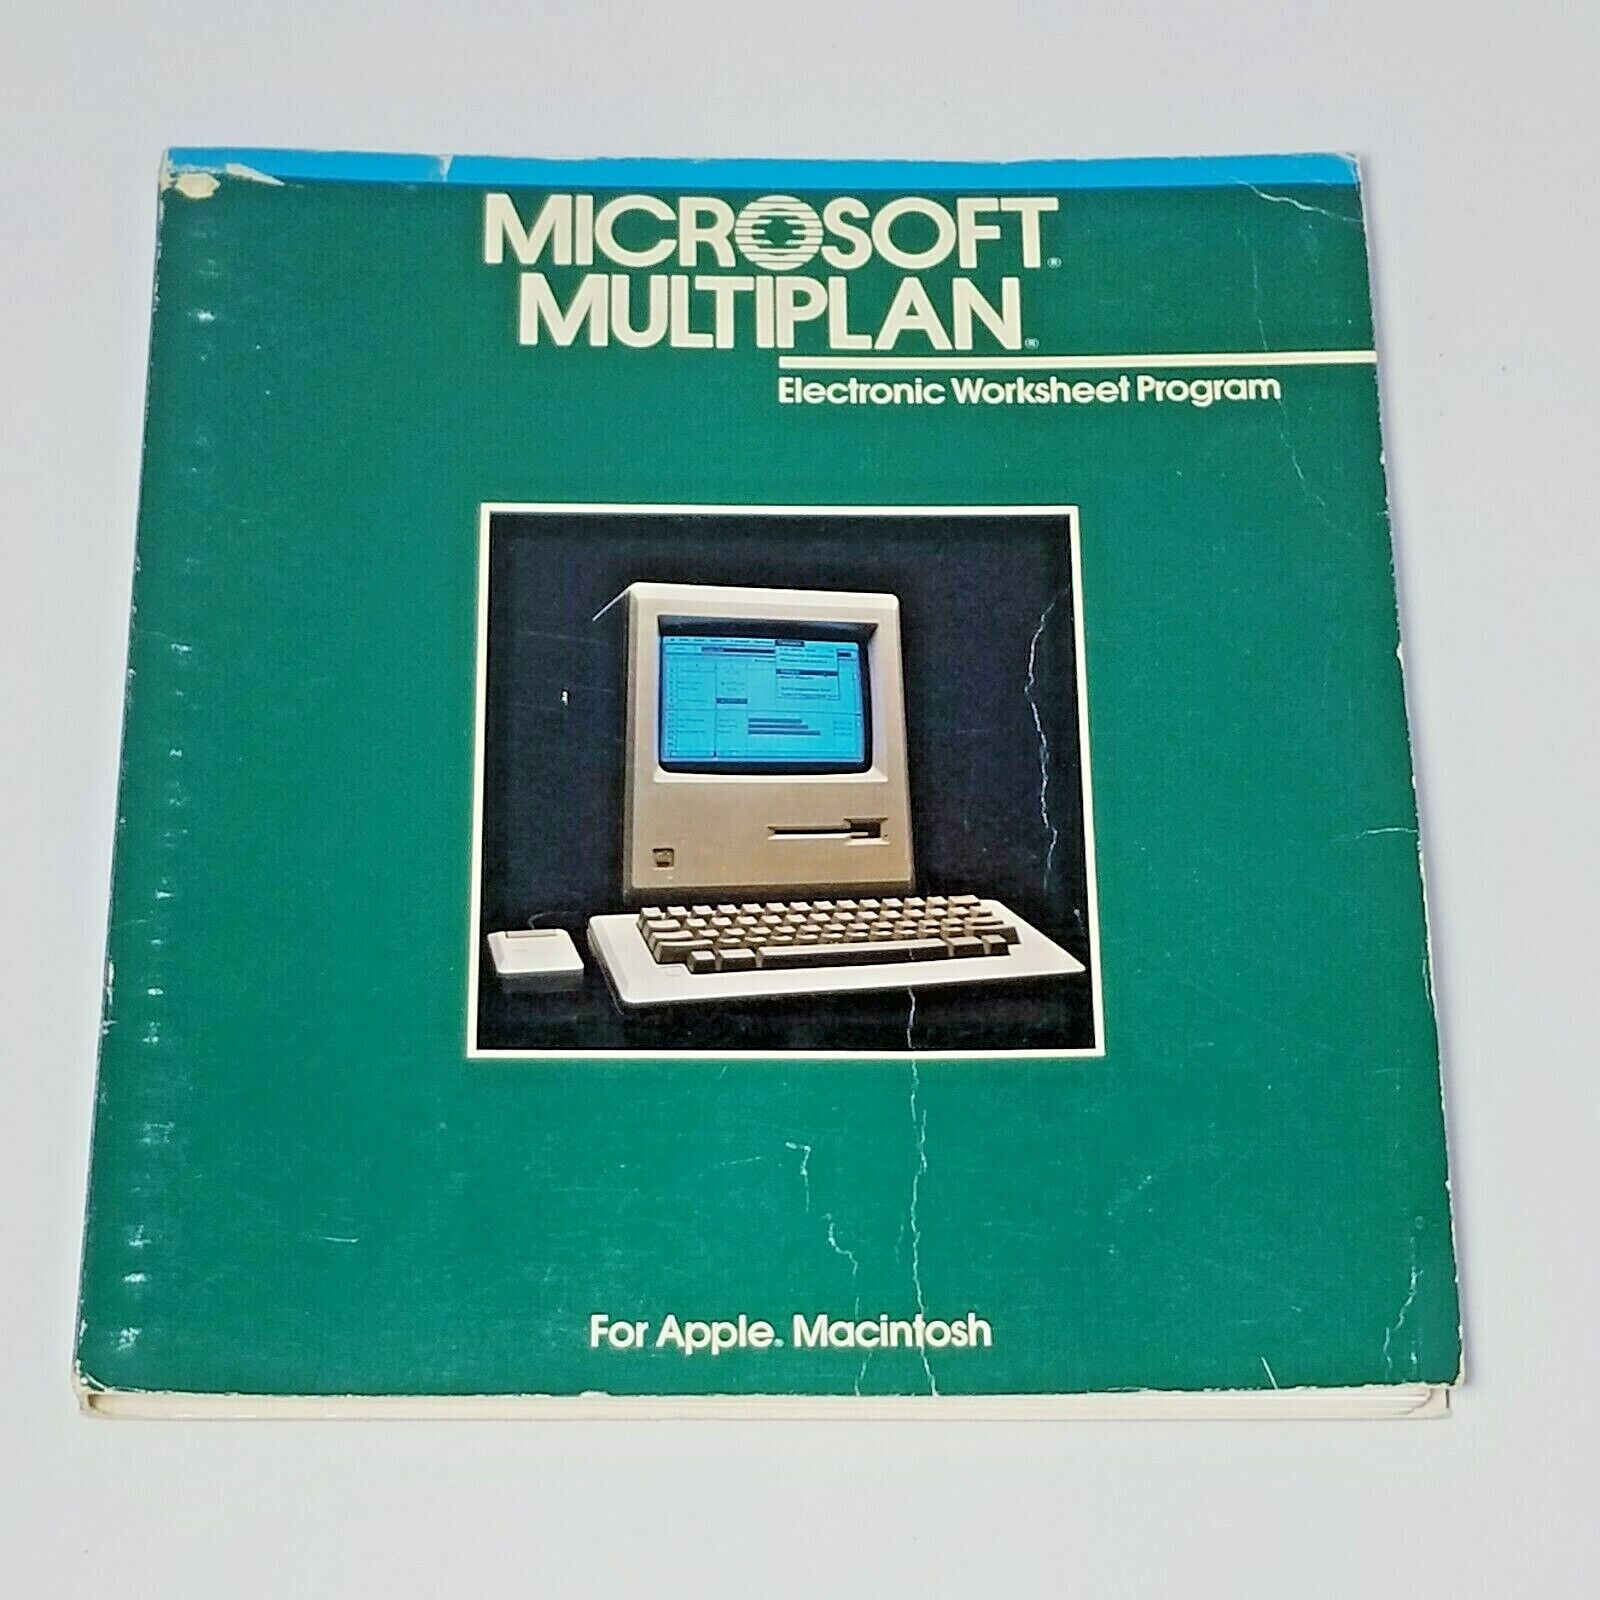 Microsoft MULTIPLAN Electronic Spreadsheet Program Manual for Apple Macintosh